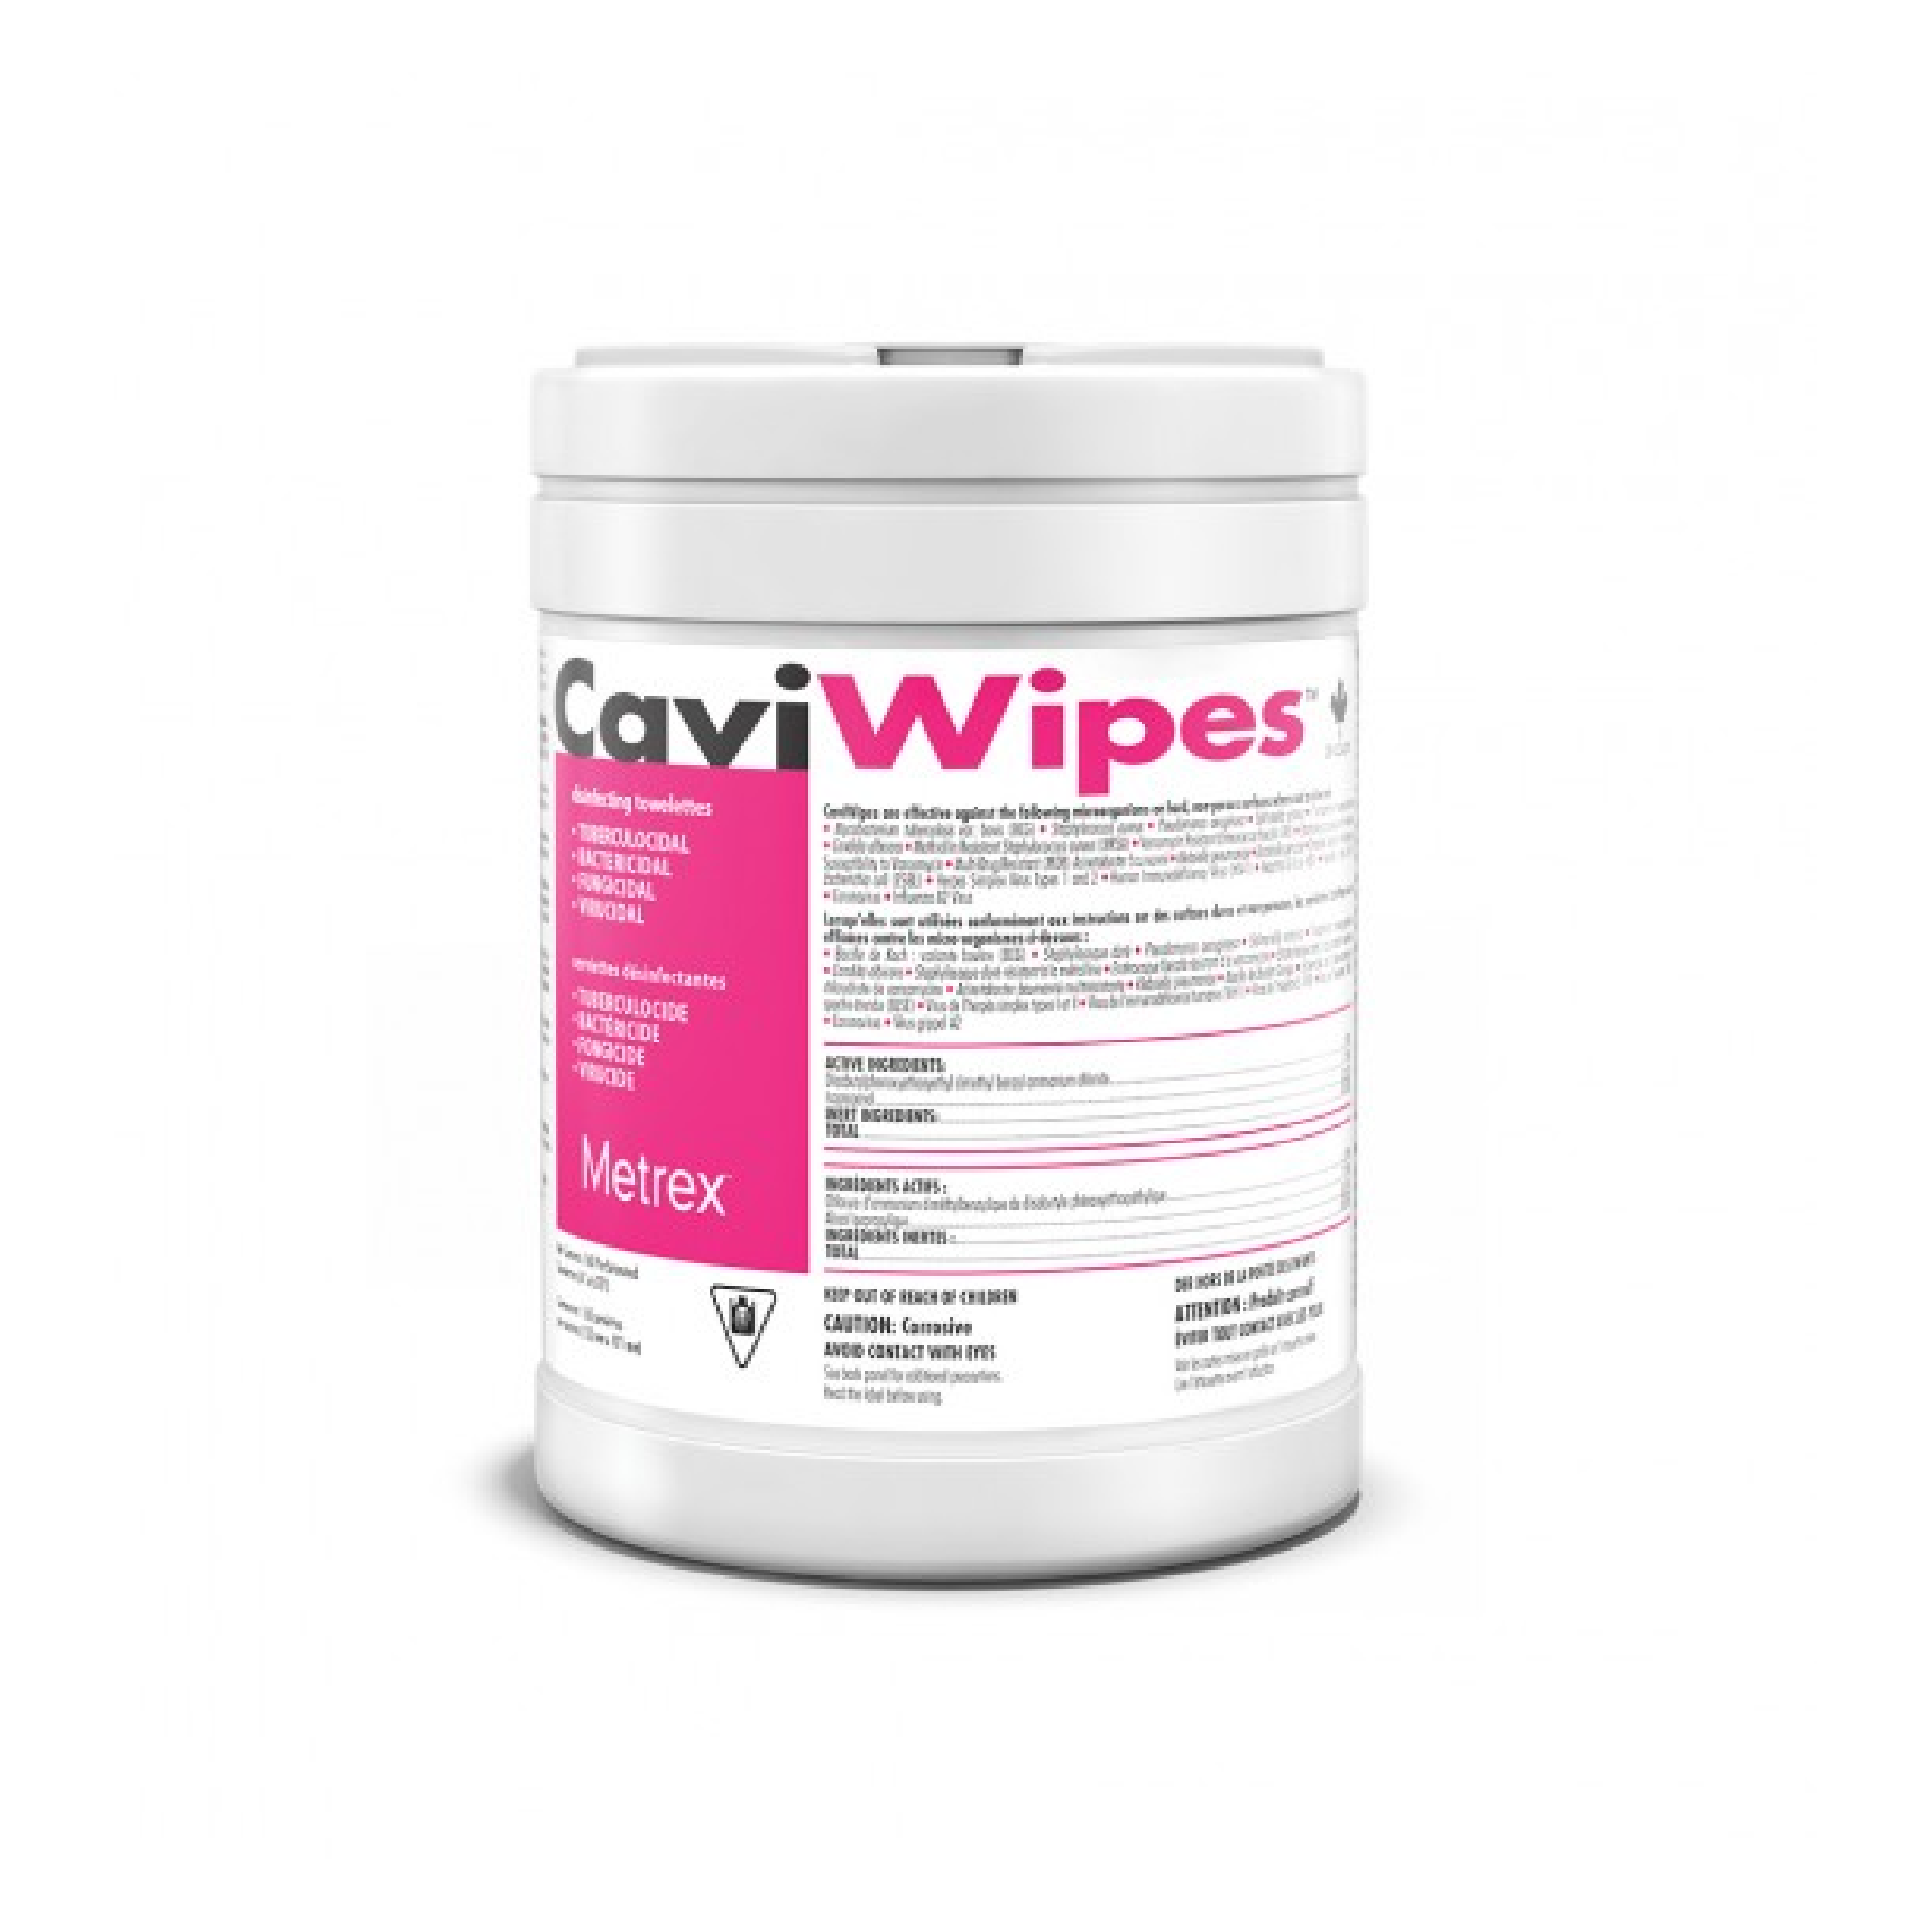 CaviWipes Metrex Disinfecting Wipes